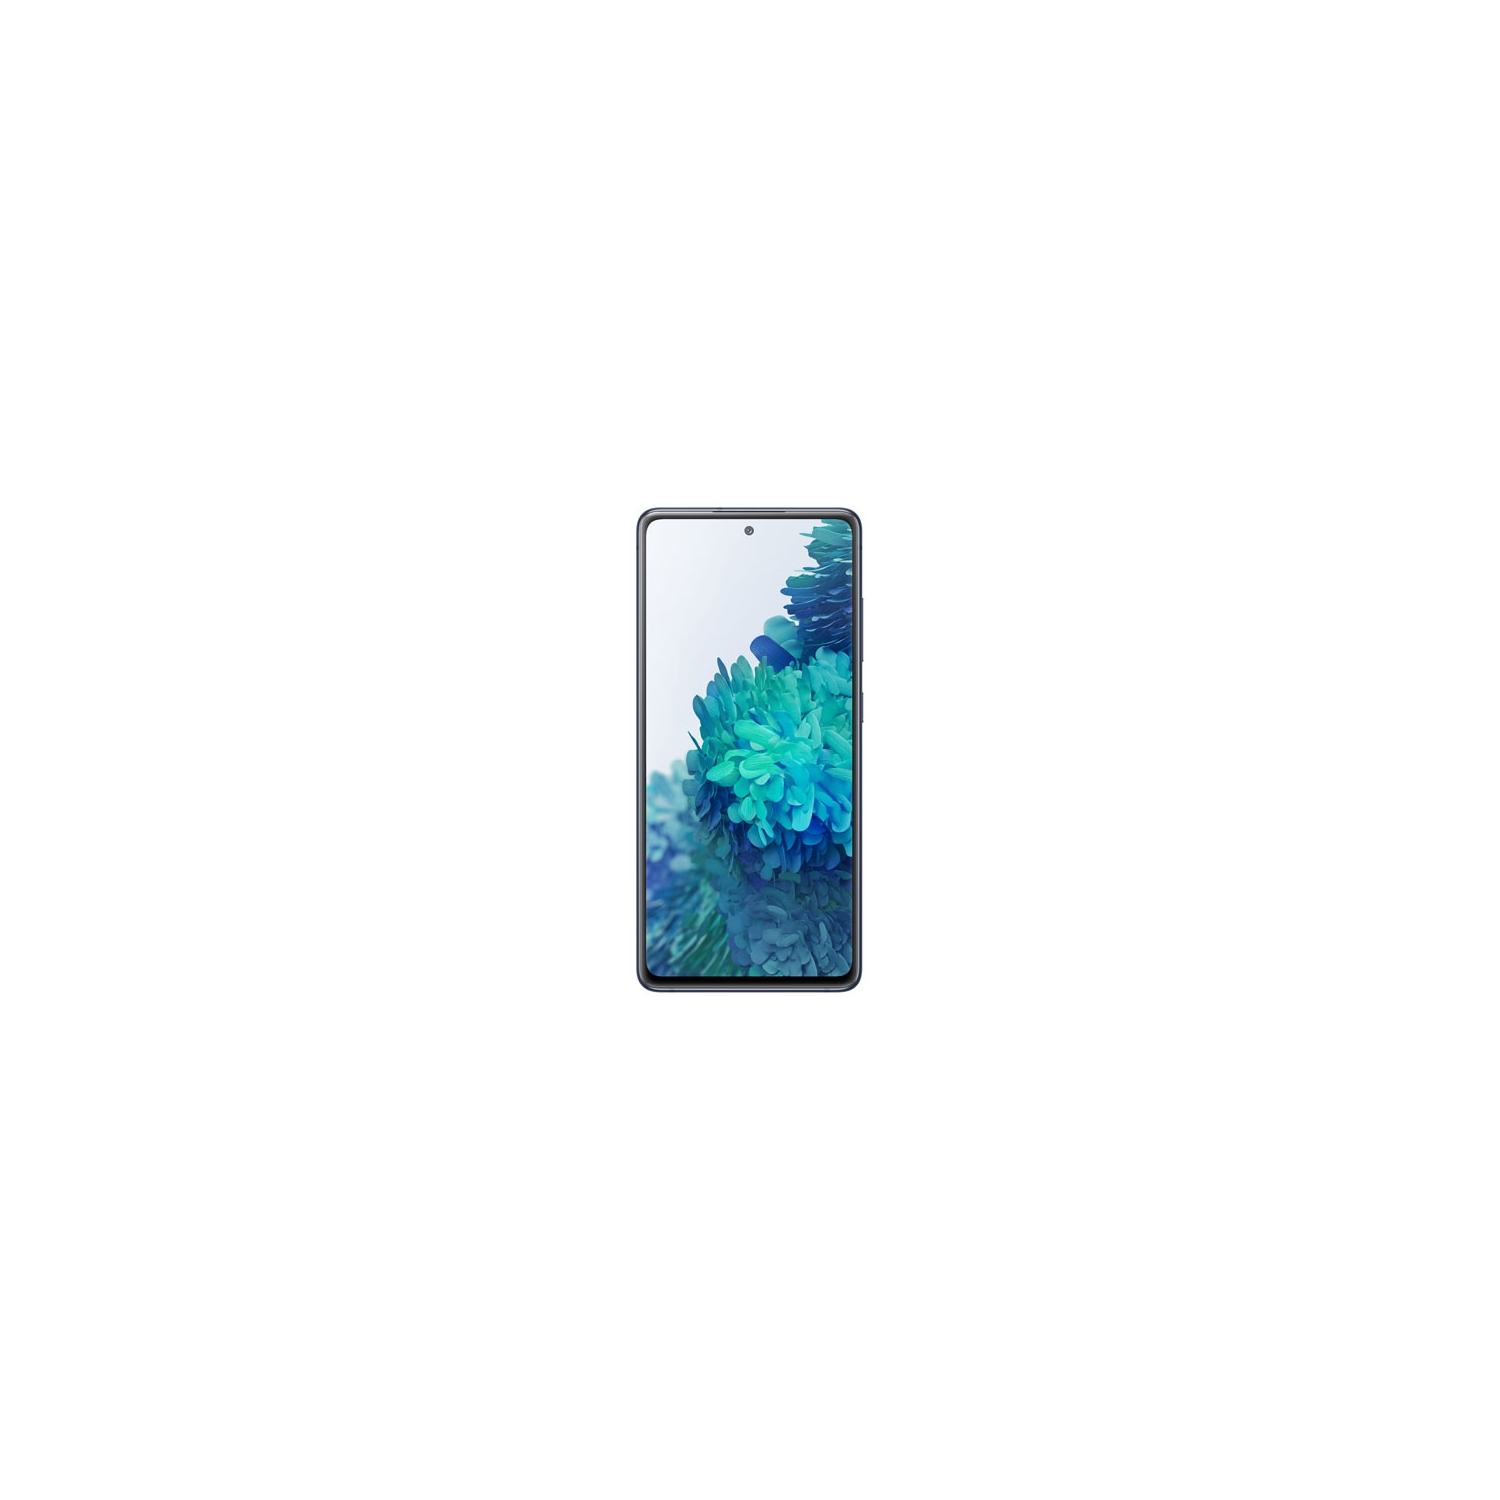 Refurbished (Good) - Samsung Galaxy S20 FE 5G 128GB - Cloud Navy - Unlocked